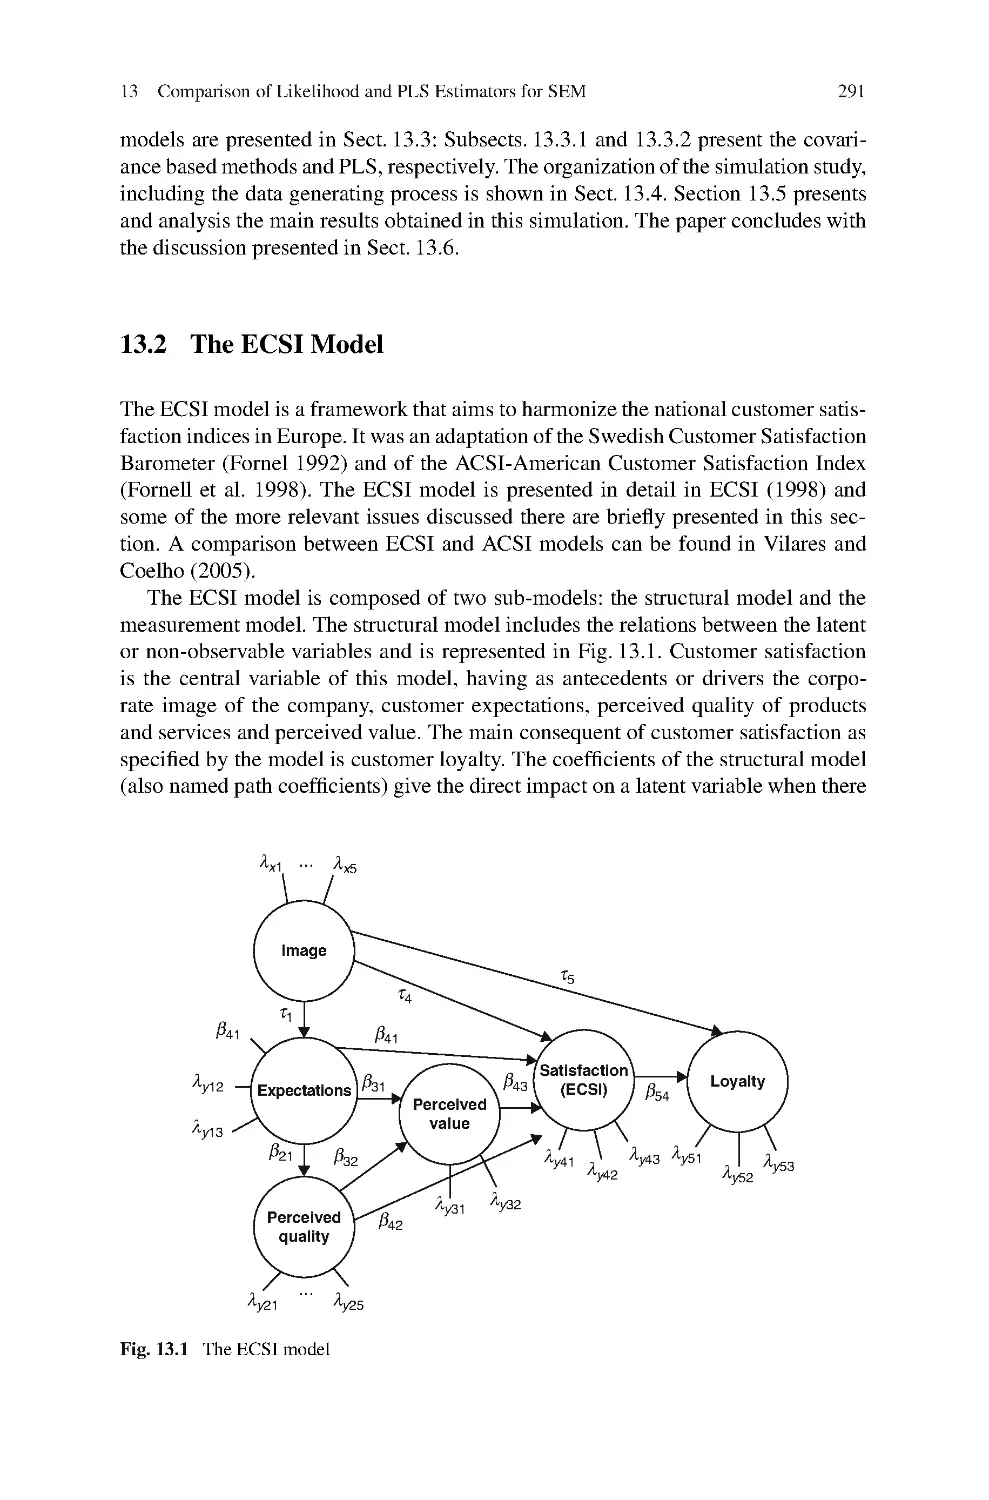 13.2 The ECSI Model